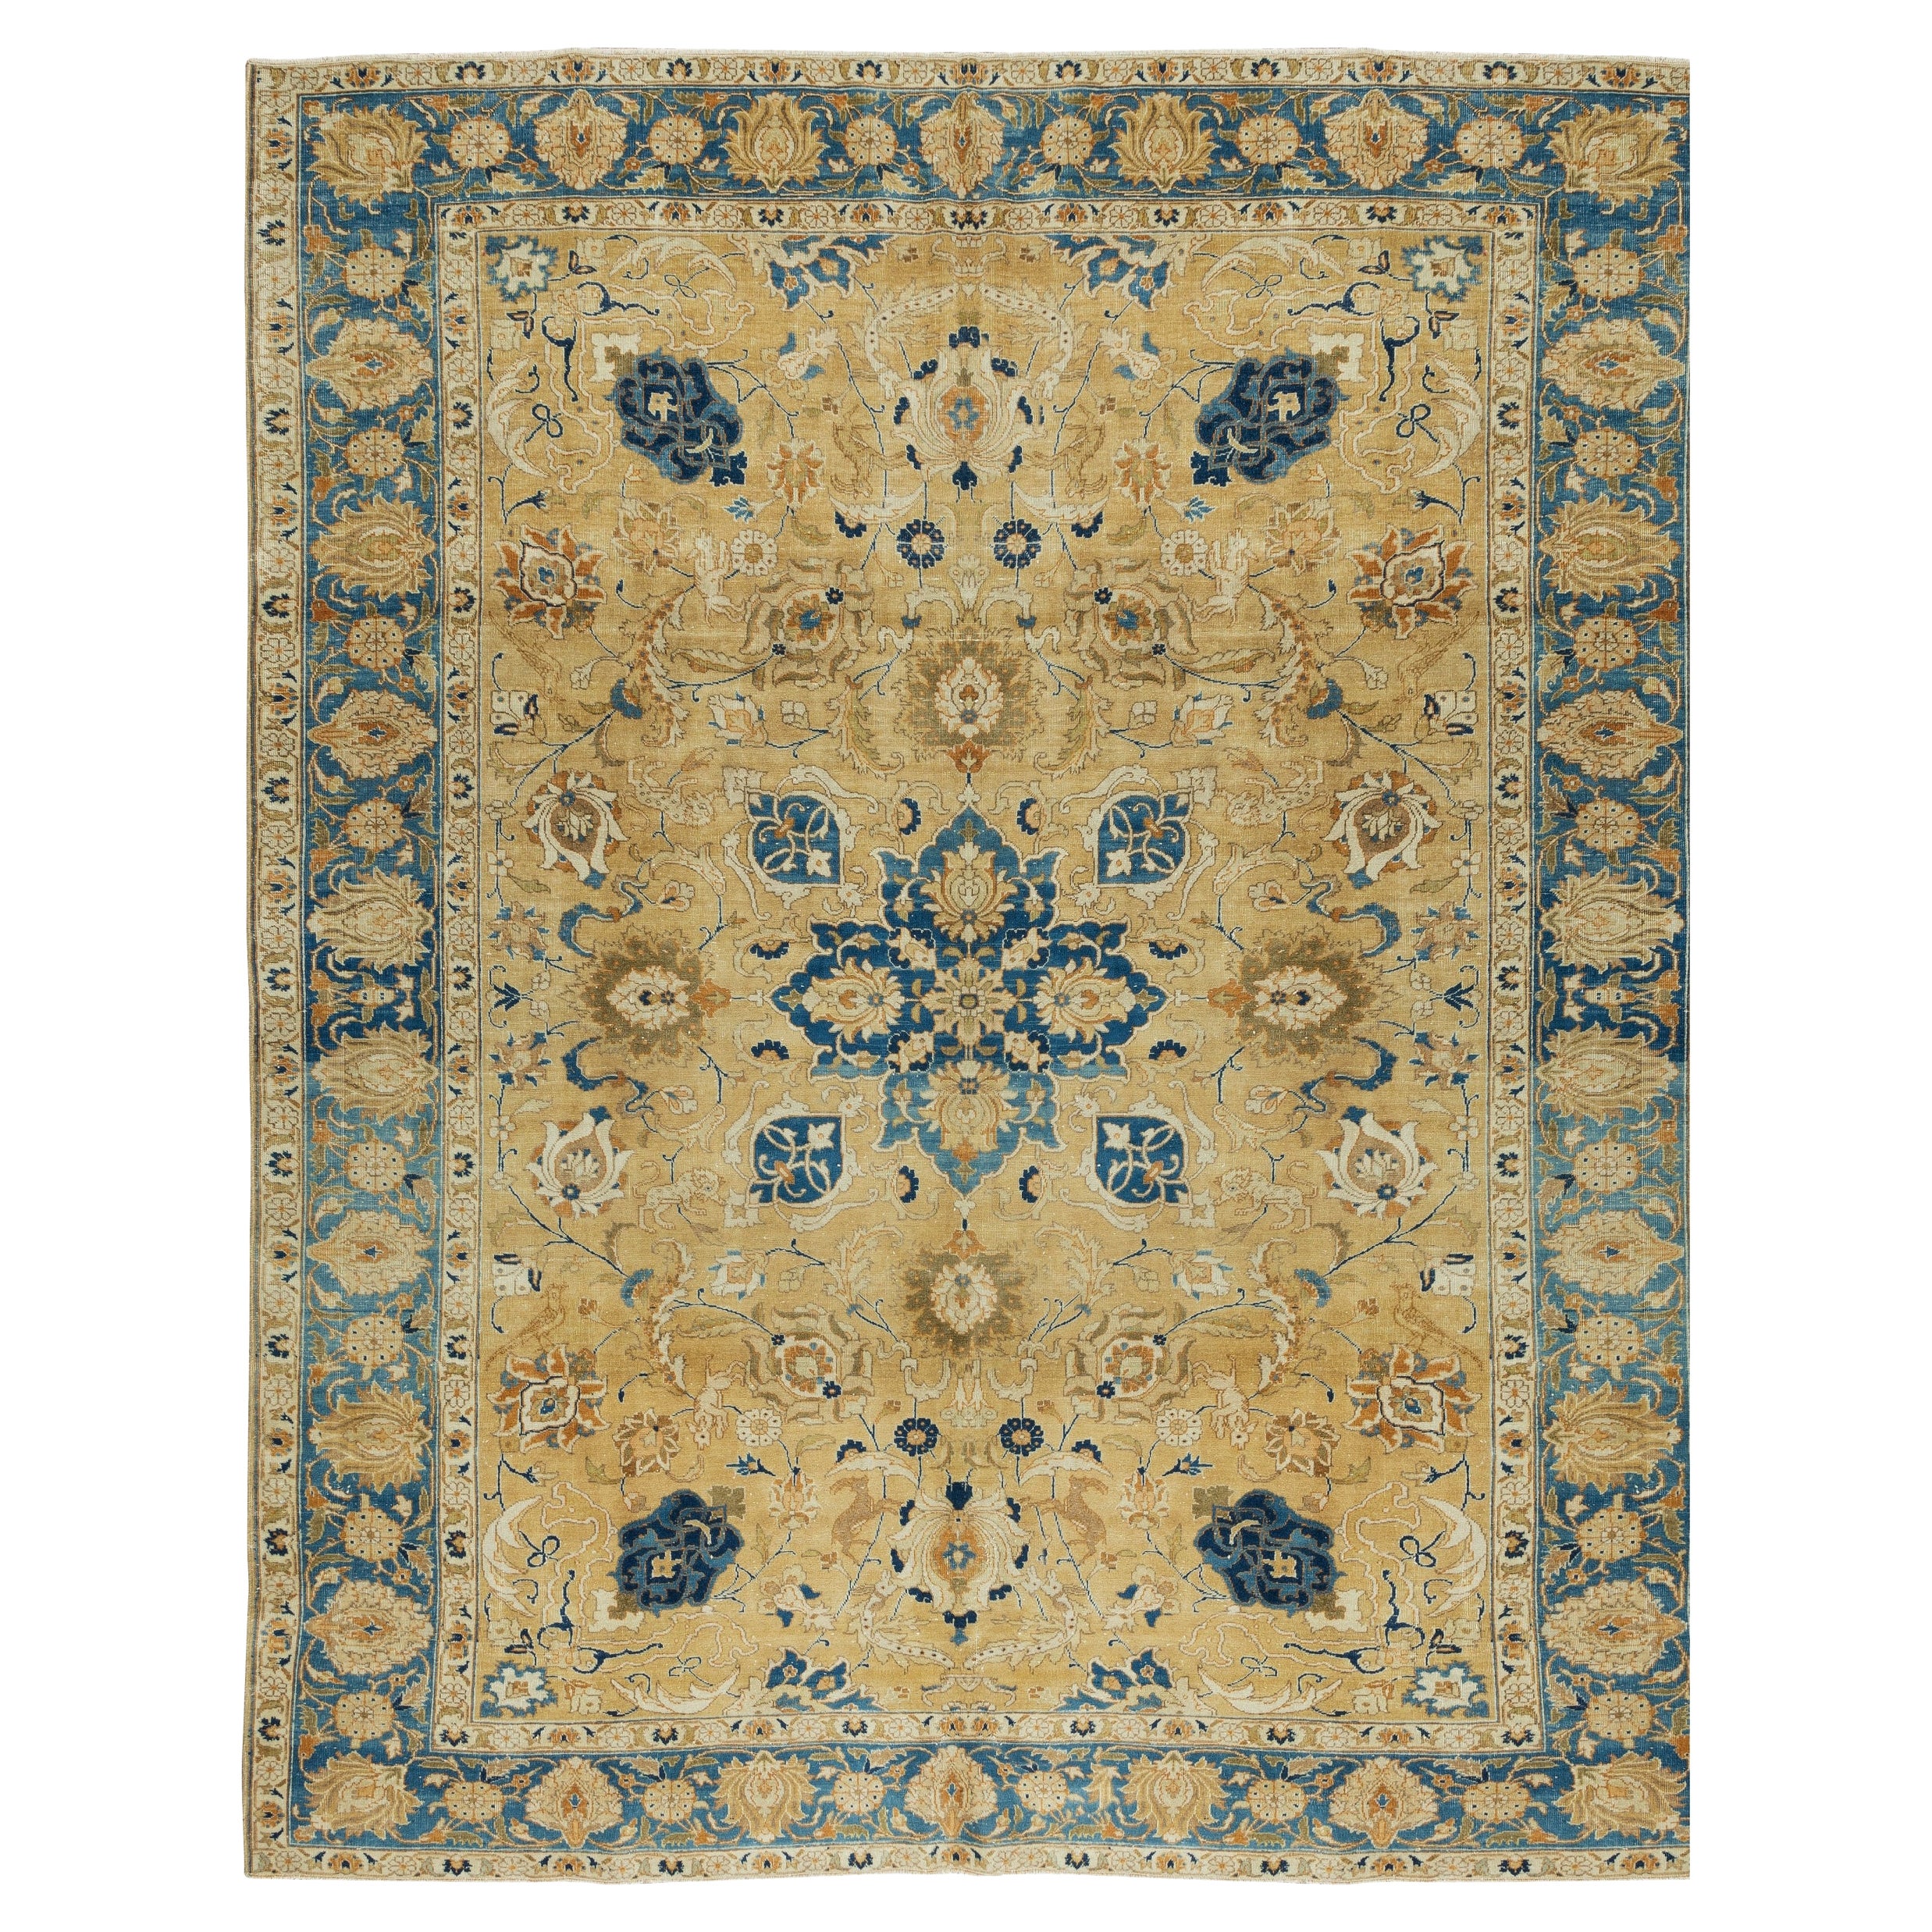 8x11 Ft Hand Knotted Area Rug in Beige & Blue, Vintage Floral Turkish Carpet